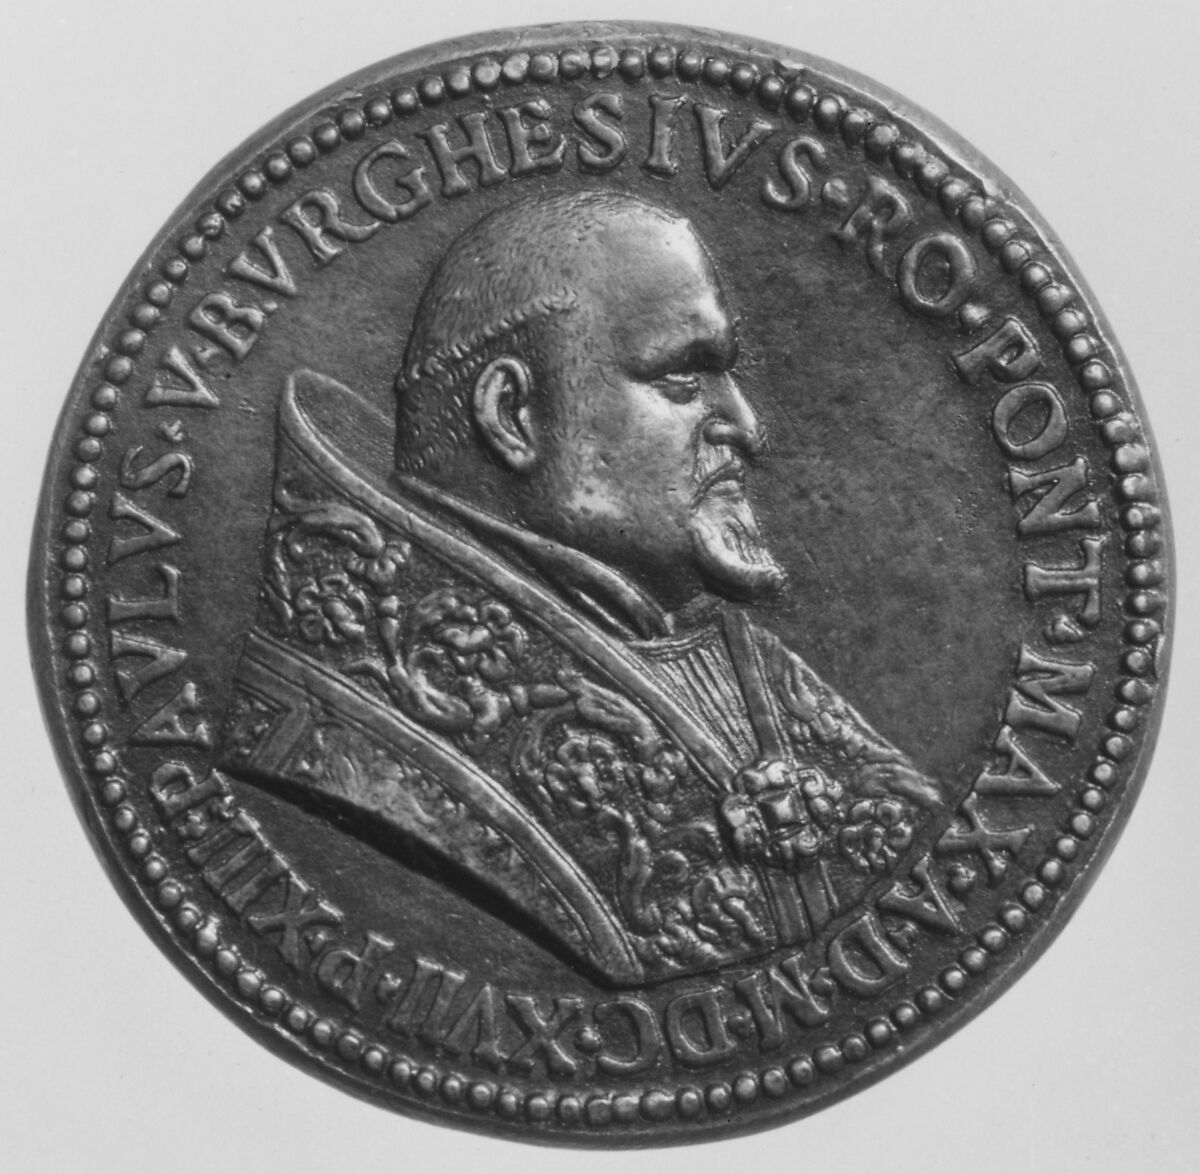 Pope Paul V (Camillo Borghese), 1552–1621, Medalist: Giacomo Antonio Moro (active 1610–24, died 1625), Bronze, Italian 